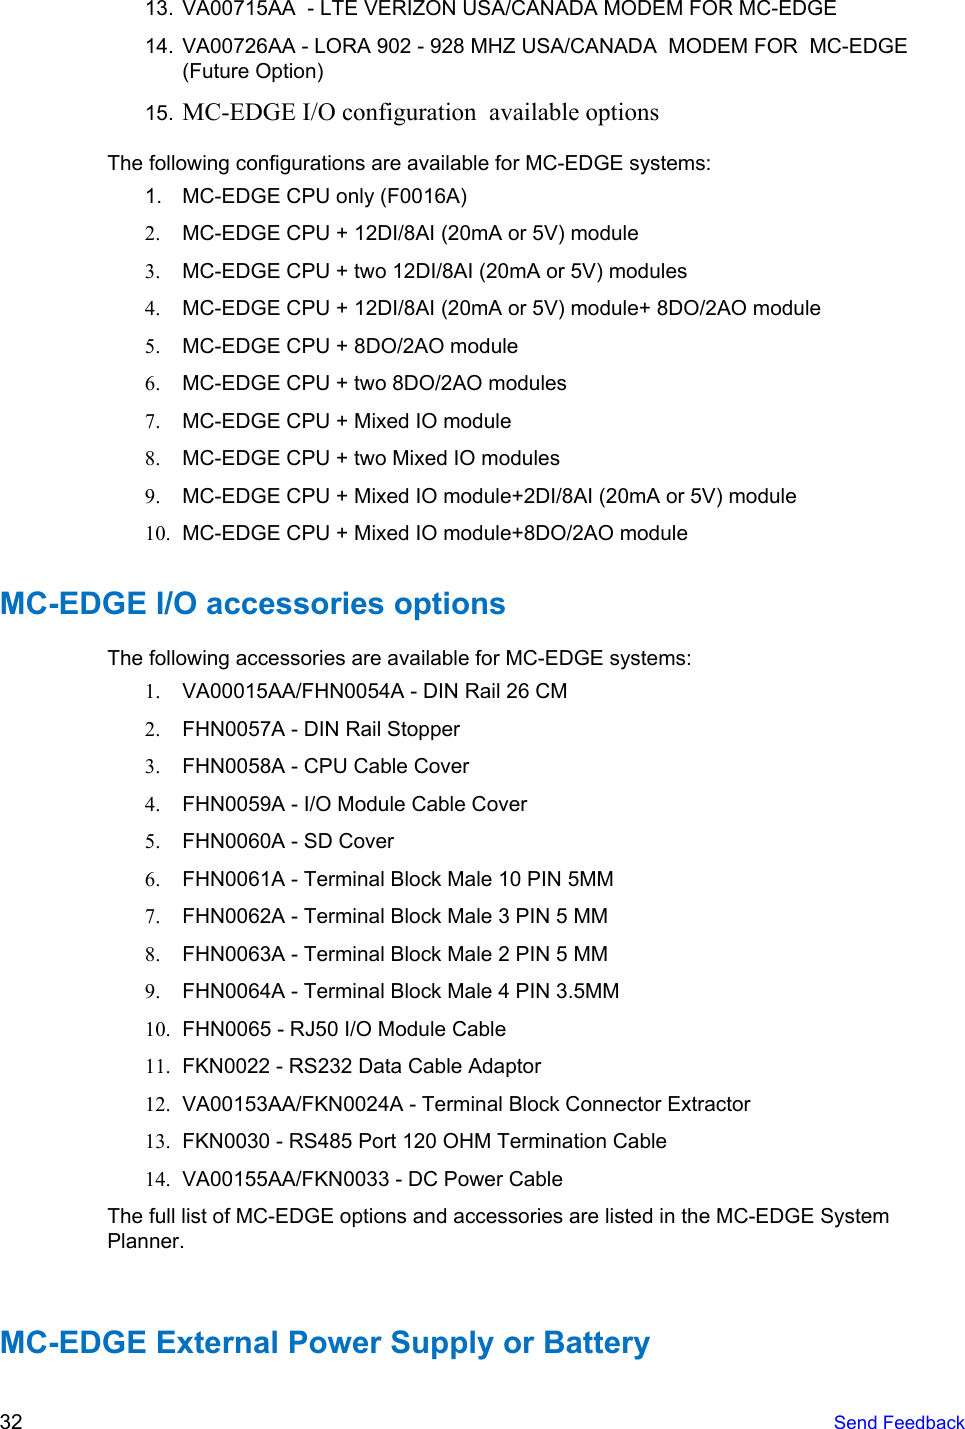     13. VA00715AA  - LTE VERIZON USA/CANADA MODEM FOR MC-EDGE 14. VA00726AA - LORA 902 - 928 MHZ USA/CANADA  MODEM FOR  MC-EDGE (Future Option)  15. MC-EDGE I/O configuration  available options  The following configurations are available for MC-EDGE systems: 1. MC-EDGE CPU only (F0016A) 2. MC-EDGE CPU + 12DI/8AI (20mA or 5V) module 3. MC-EDGE CPU + two 12DI/8AI (20mA or 5V) modules 4. MC-EDGE CPU + 12DI/8AI (20mA or 5V) module+ 8DO/2AO module 5. MC-EDGE CPU + 8DO/2AO module 6. MC-EDGE CPU + two 8DO/2AO modules 7. MC-EDGE CPU + Mixed IO module 8. MC-EDGE CPU + two Mixed IO modules 9. MC-EDGE CPU + Mixed IO module+2DI/8AI (20mA or 5V) module 10. MC-EDGE CPU + Mixed IO module+8DO/2AO module MC-EDGE I/O accessories options The following accessories are available for MC-EDGE systems: 1. VA00015AA/FHN0054A - DIN Rail 26 CM 2. FHN0057A - DIN Rail Stopper 3. FHN0058A - CPU Cable Cover 4. FHN0059A - I/O Module Cable Cover 5. FHN0060A - SD Cover 6. FHN0061A - Terminal Block Male 10 PIN 5MM 7. FHN0062A - Terminal Block Male 3 PIN 5 MM 8. FHN0063A - Terminal Block Male 2 PIN 5 MM 9. FHN0064A - Terminal Block Male 4 PIN 3.5MM 10. FHN0065 - RJ50 I/O Module Cable 11. FKN0022 - RS232 Data Cable Adaptor 12. VA00153AA/FKN0024A - Terminal Block Connector Extractor 13. FKN0030 - RS485 Port 120 OHM Termination Cable 14. VA00155AA/FKN0033 - DC Power Cable The full list of MC-EDGE options and accessories are listed in the MC-EDGE System Planner.   MC-EDGE External Power Supply or Battery 32   Send Feedback  